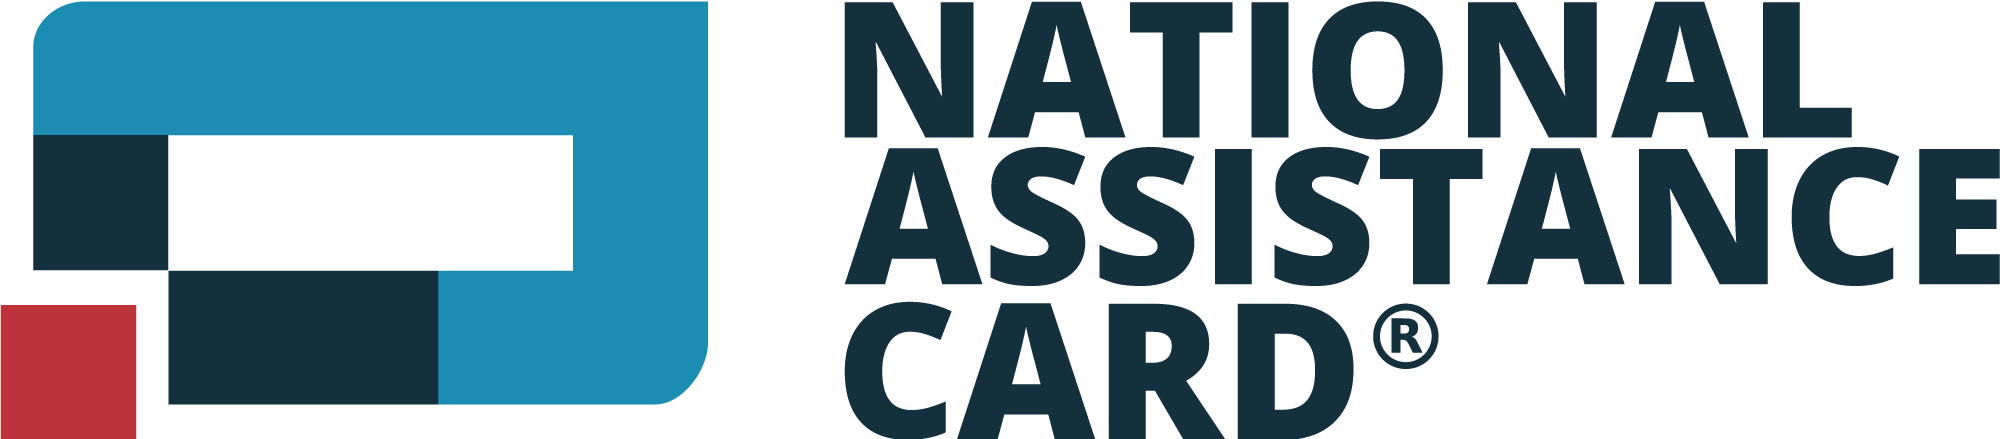 National Assistance Card Banner